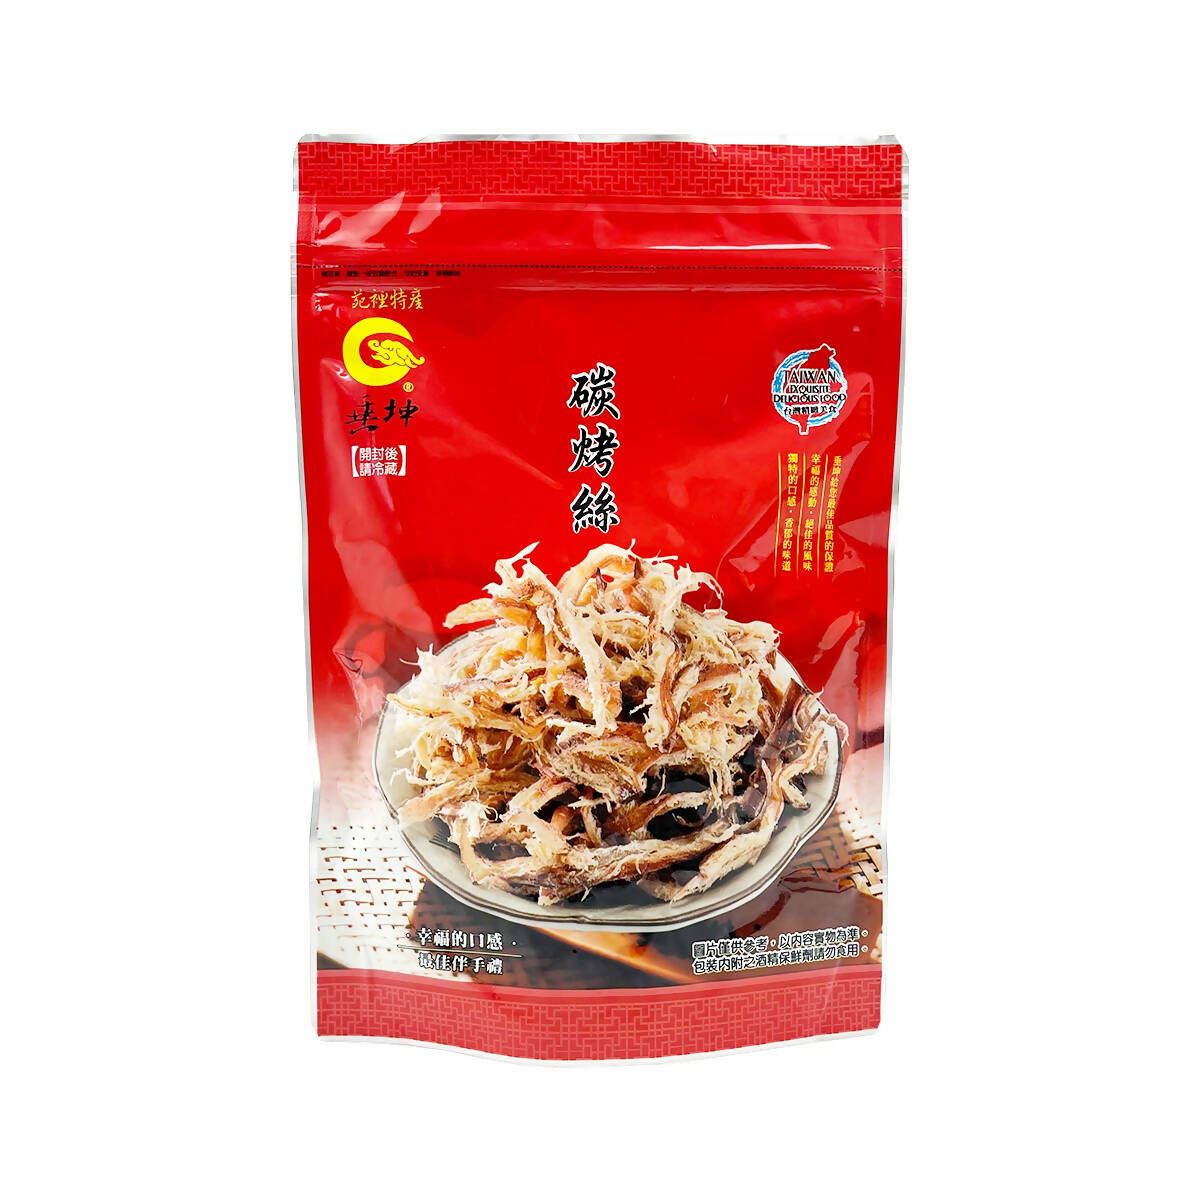 Taiwan Direct Mail【Chuikun】 CHUEI KUN Charcoal Grilled Shredded 180g 